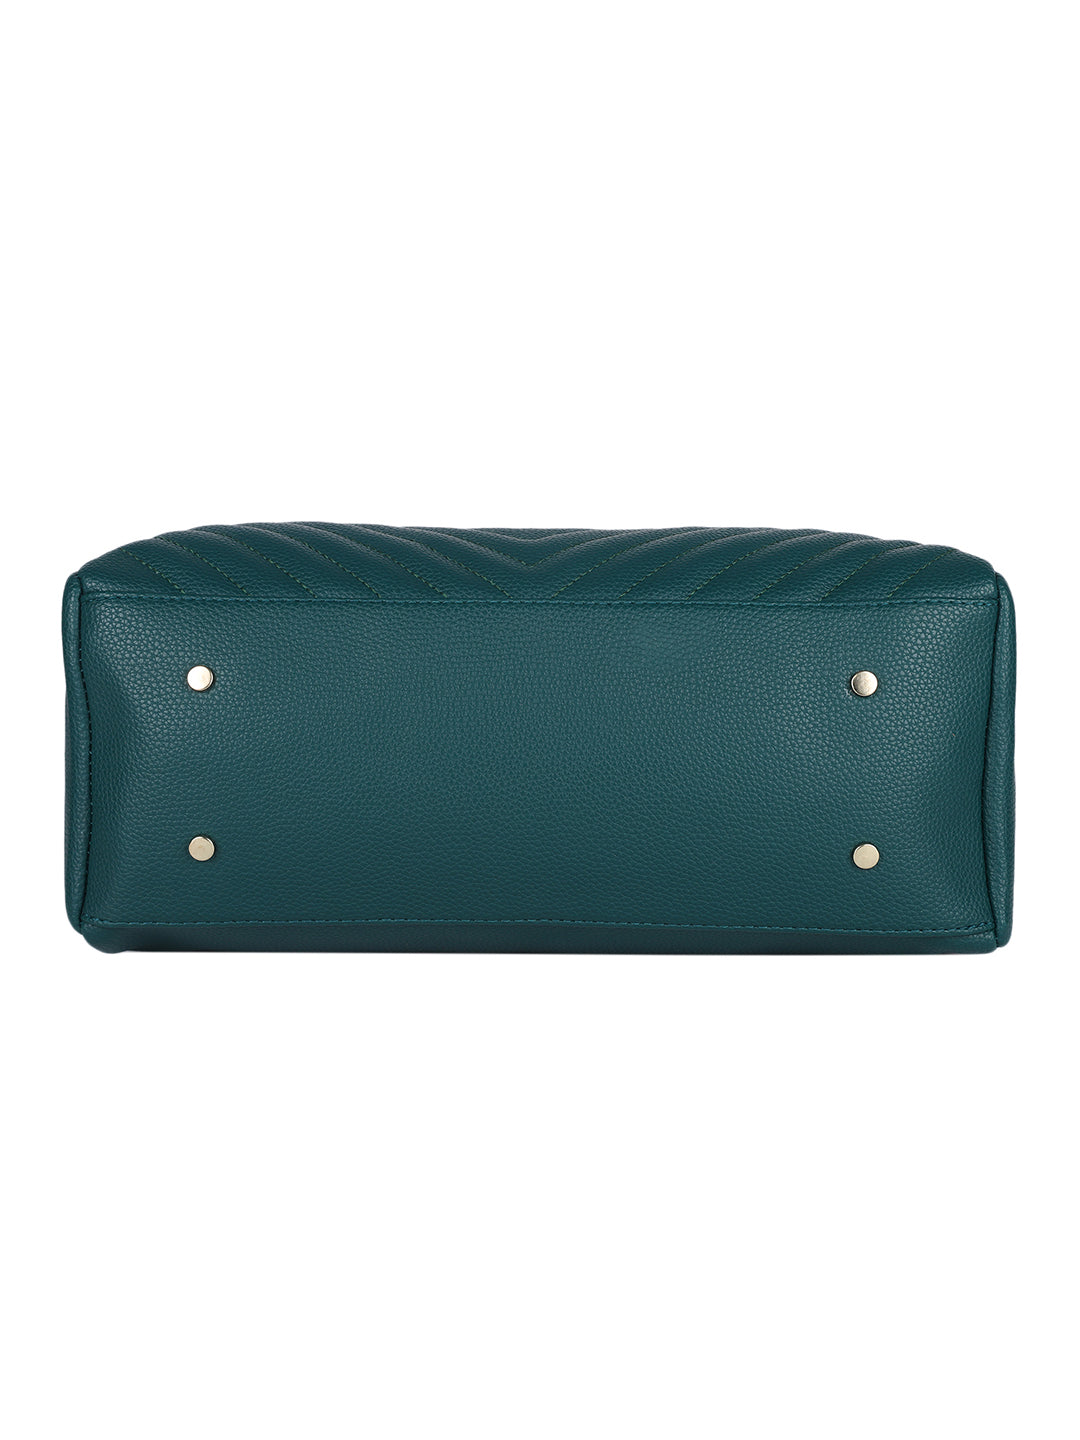 MINI WESST Green Solid Handheld Bag(MWTB107GR)